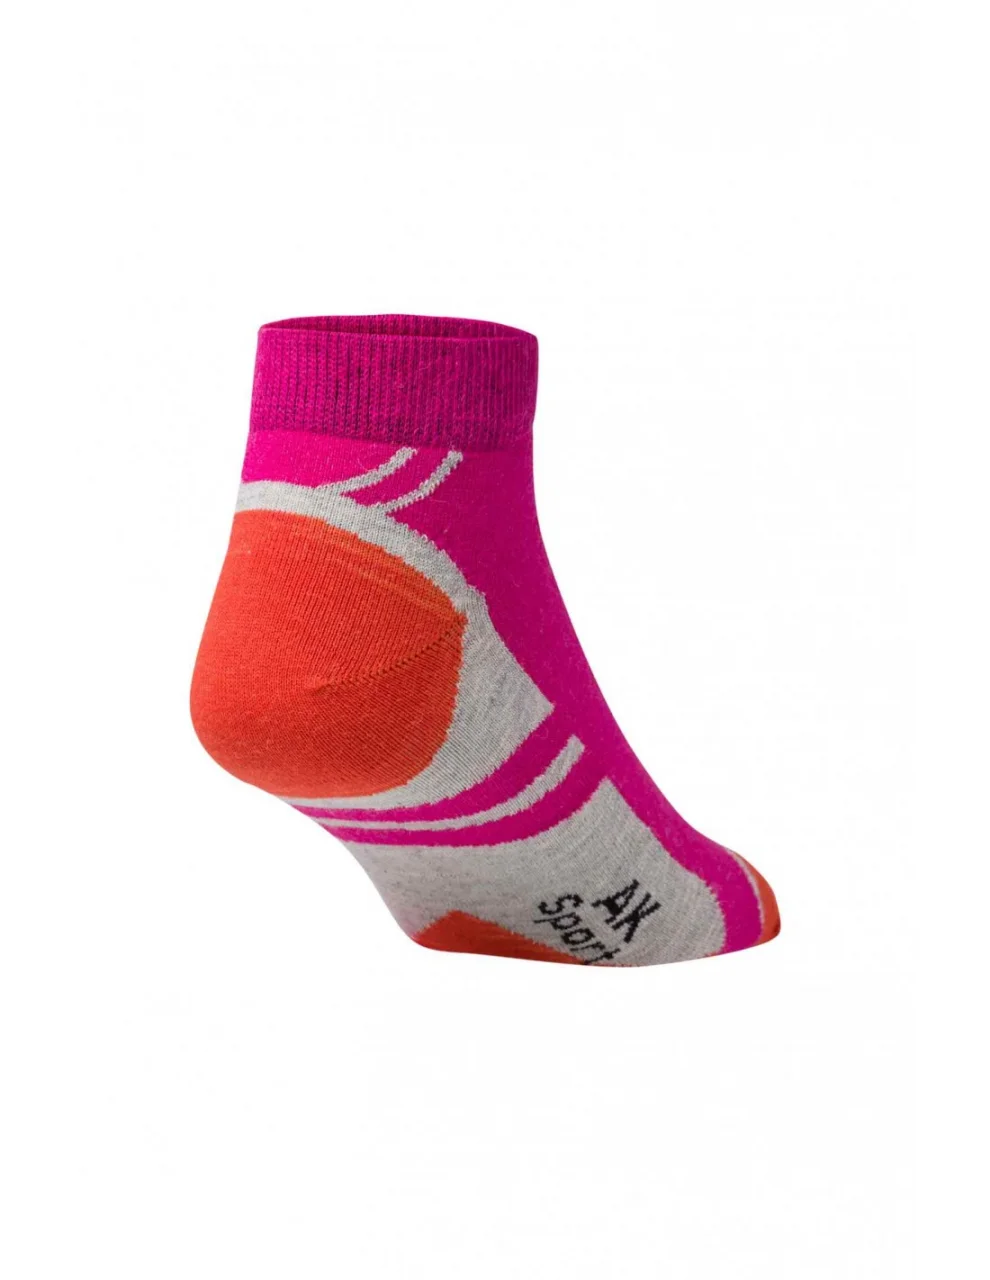 Unisex Premium SPORT sneaker socks in Alpaca and Pima Cotton blend_86489